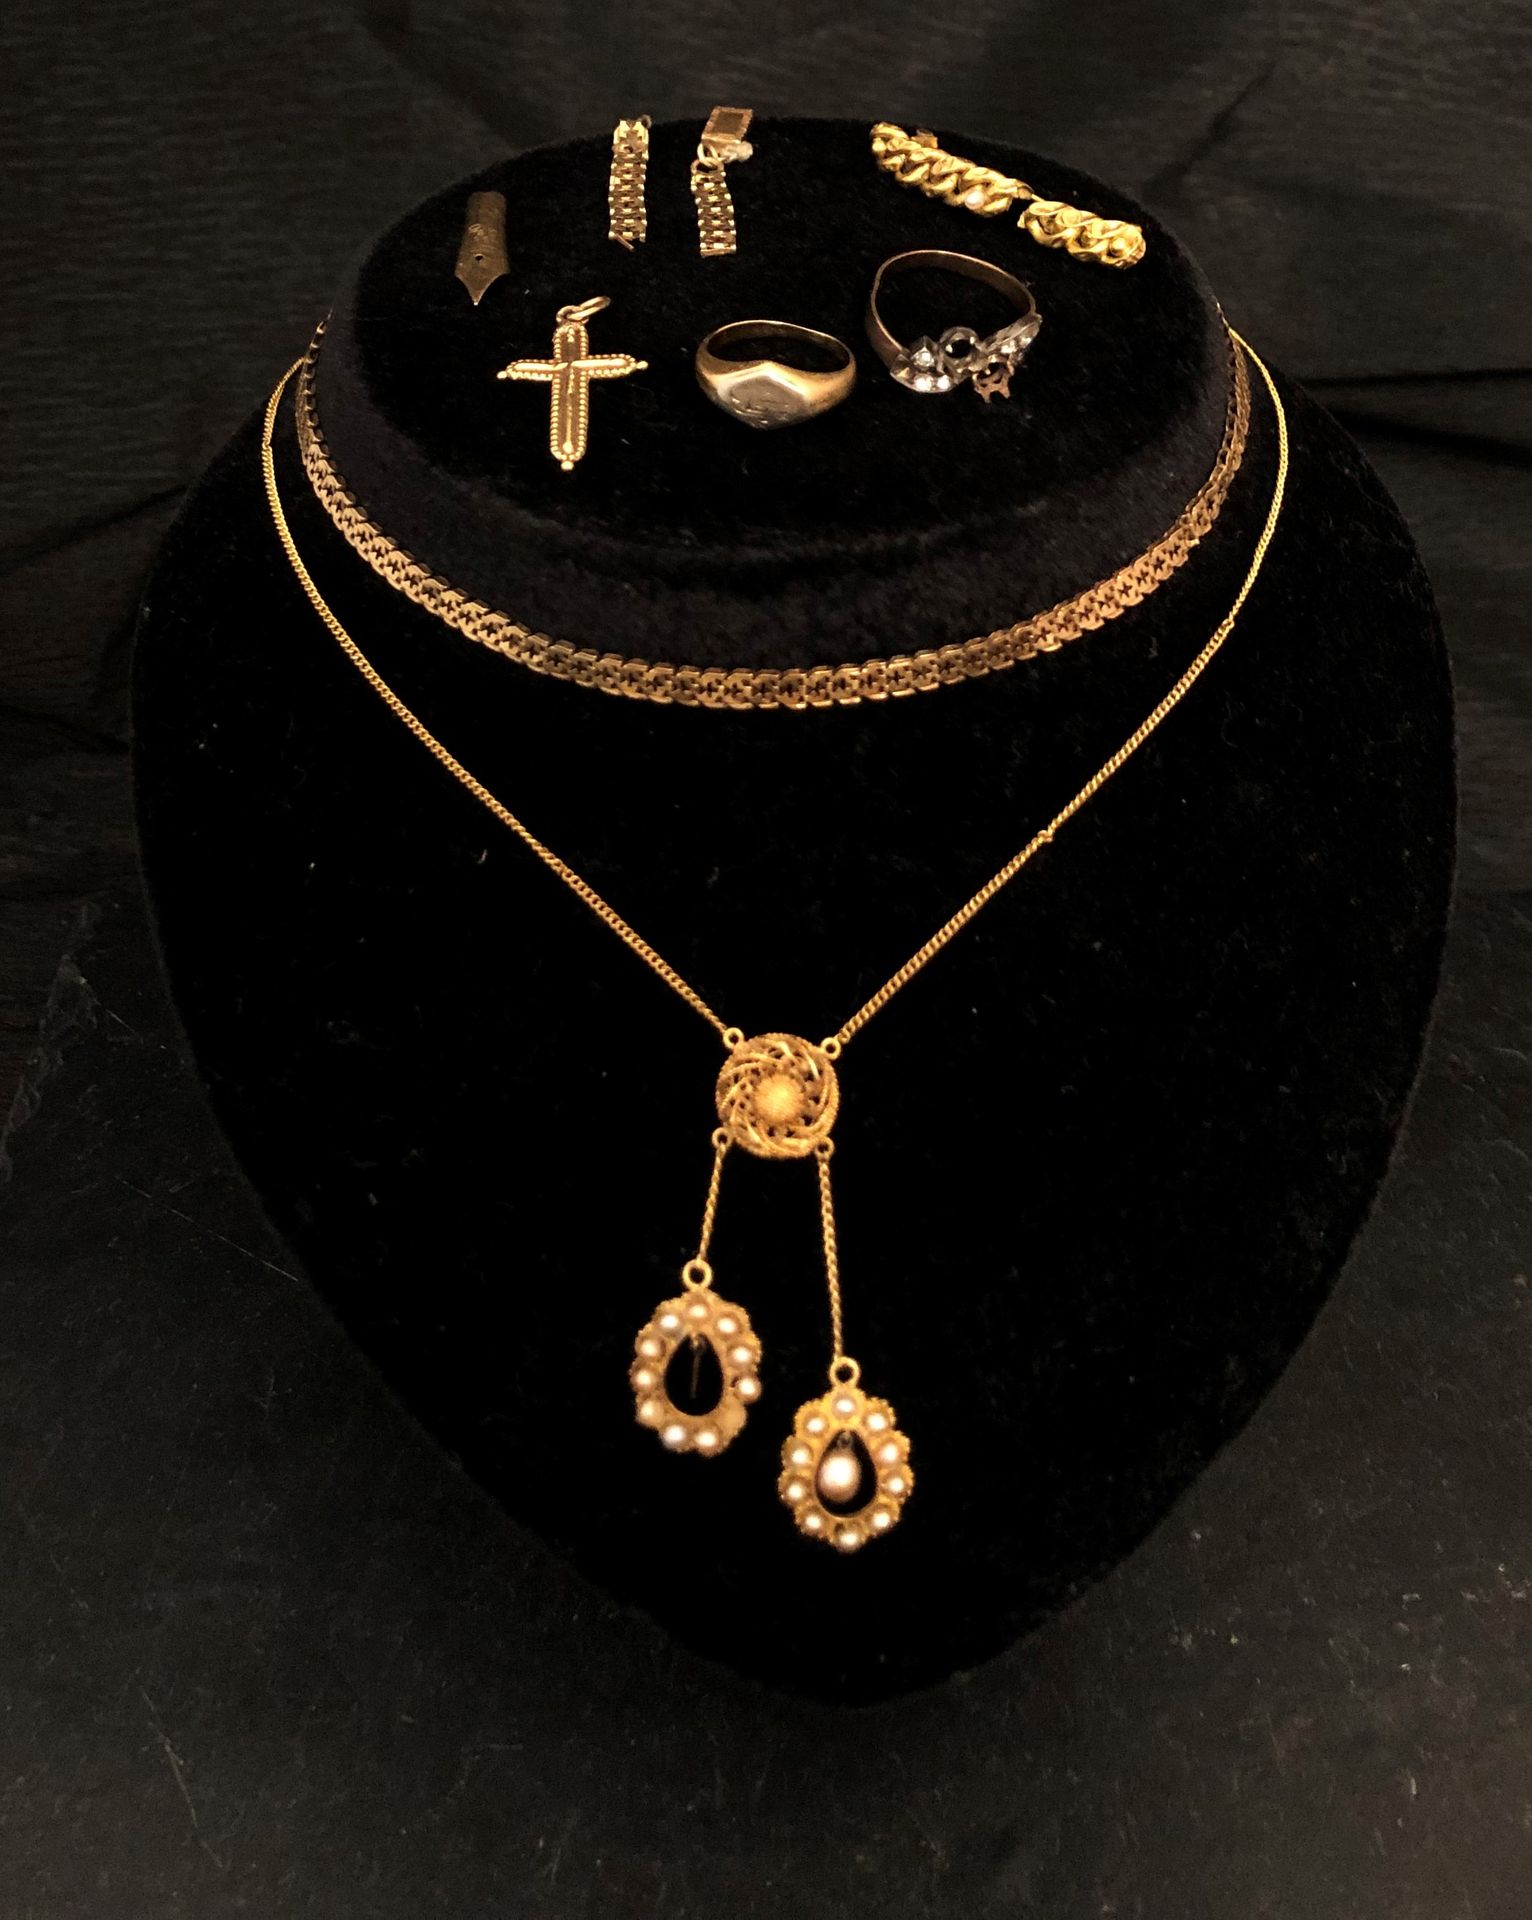 Null 一批750毫米的黄金，包括:
- 一条小的金属项链，上面装饰着仿珍珠。
- 一条机械链接（事故）断裂的项链，重量为净重：6.7克。 
- 750毫米黄&hellip;